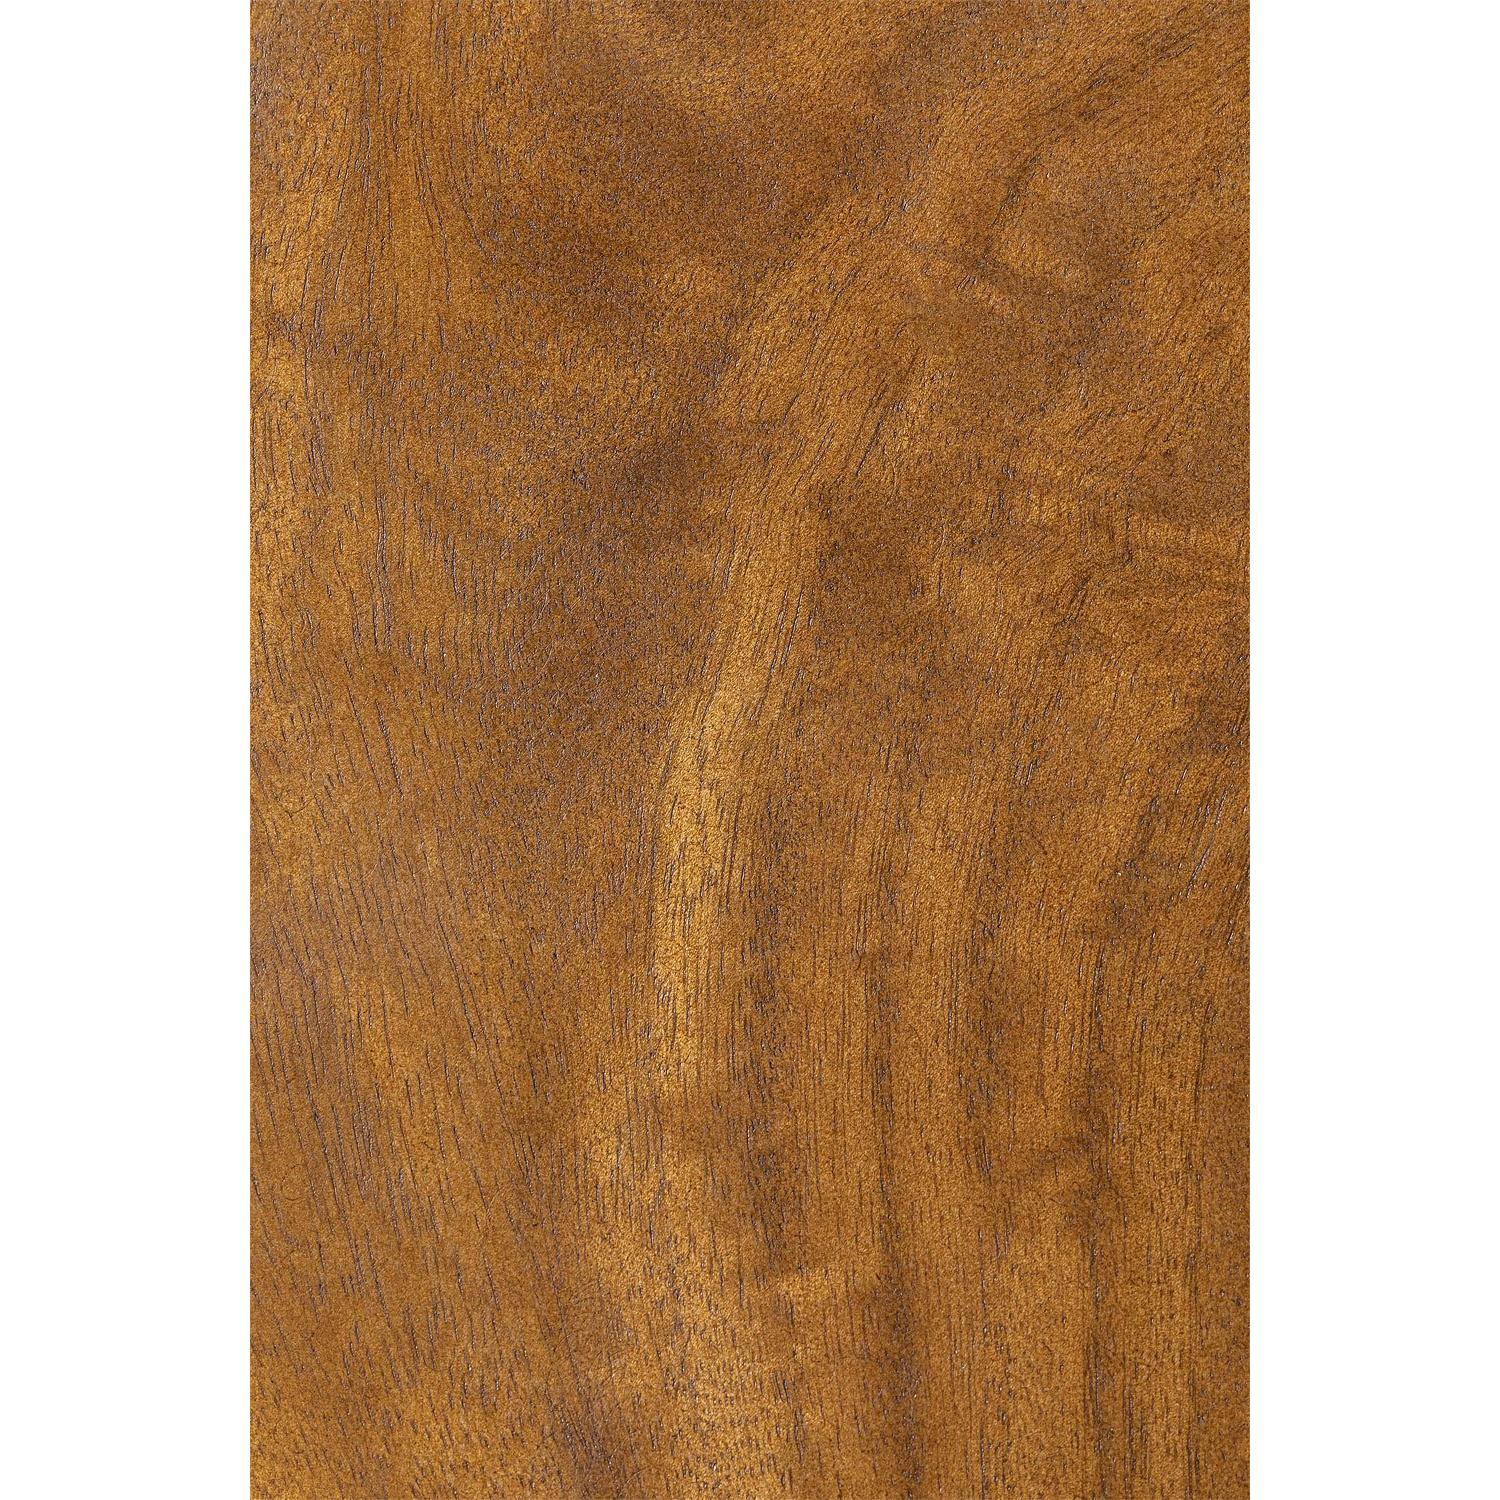 Komoda RAULIK, mango mediena, 195 cm